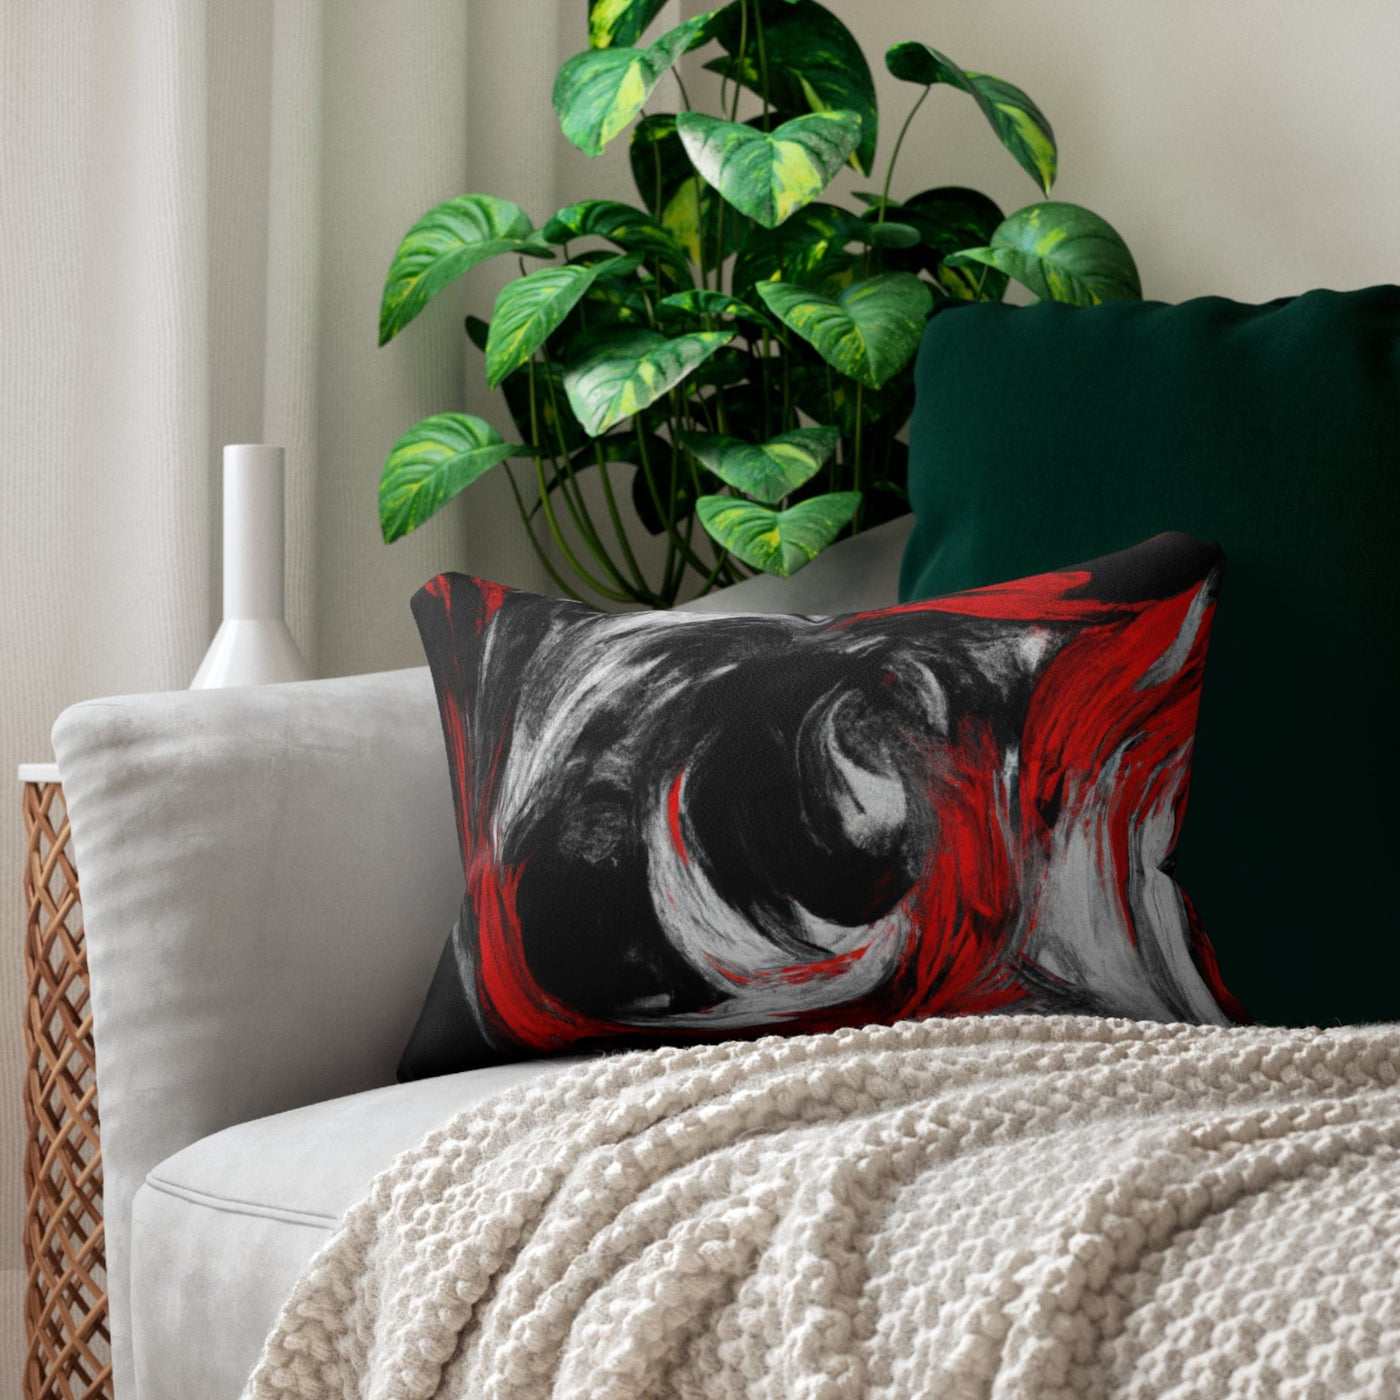 Decorative Lumbar Throw Pillow - Decorative Black Red White Abstract Seamless